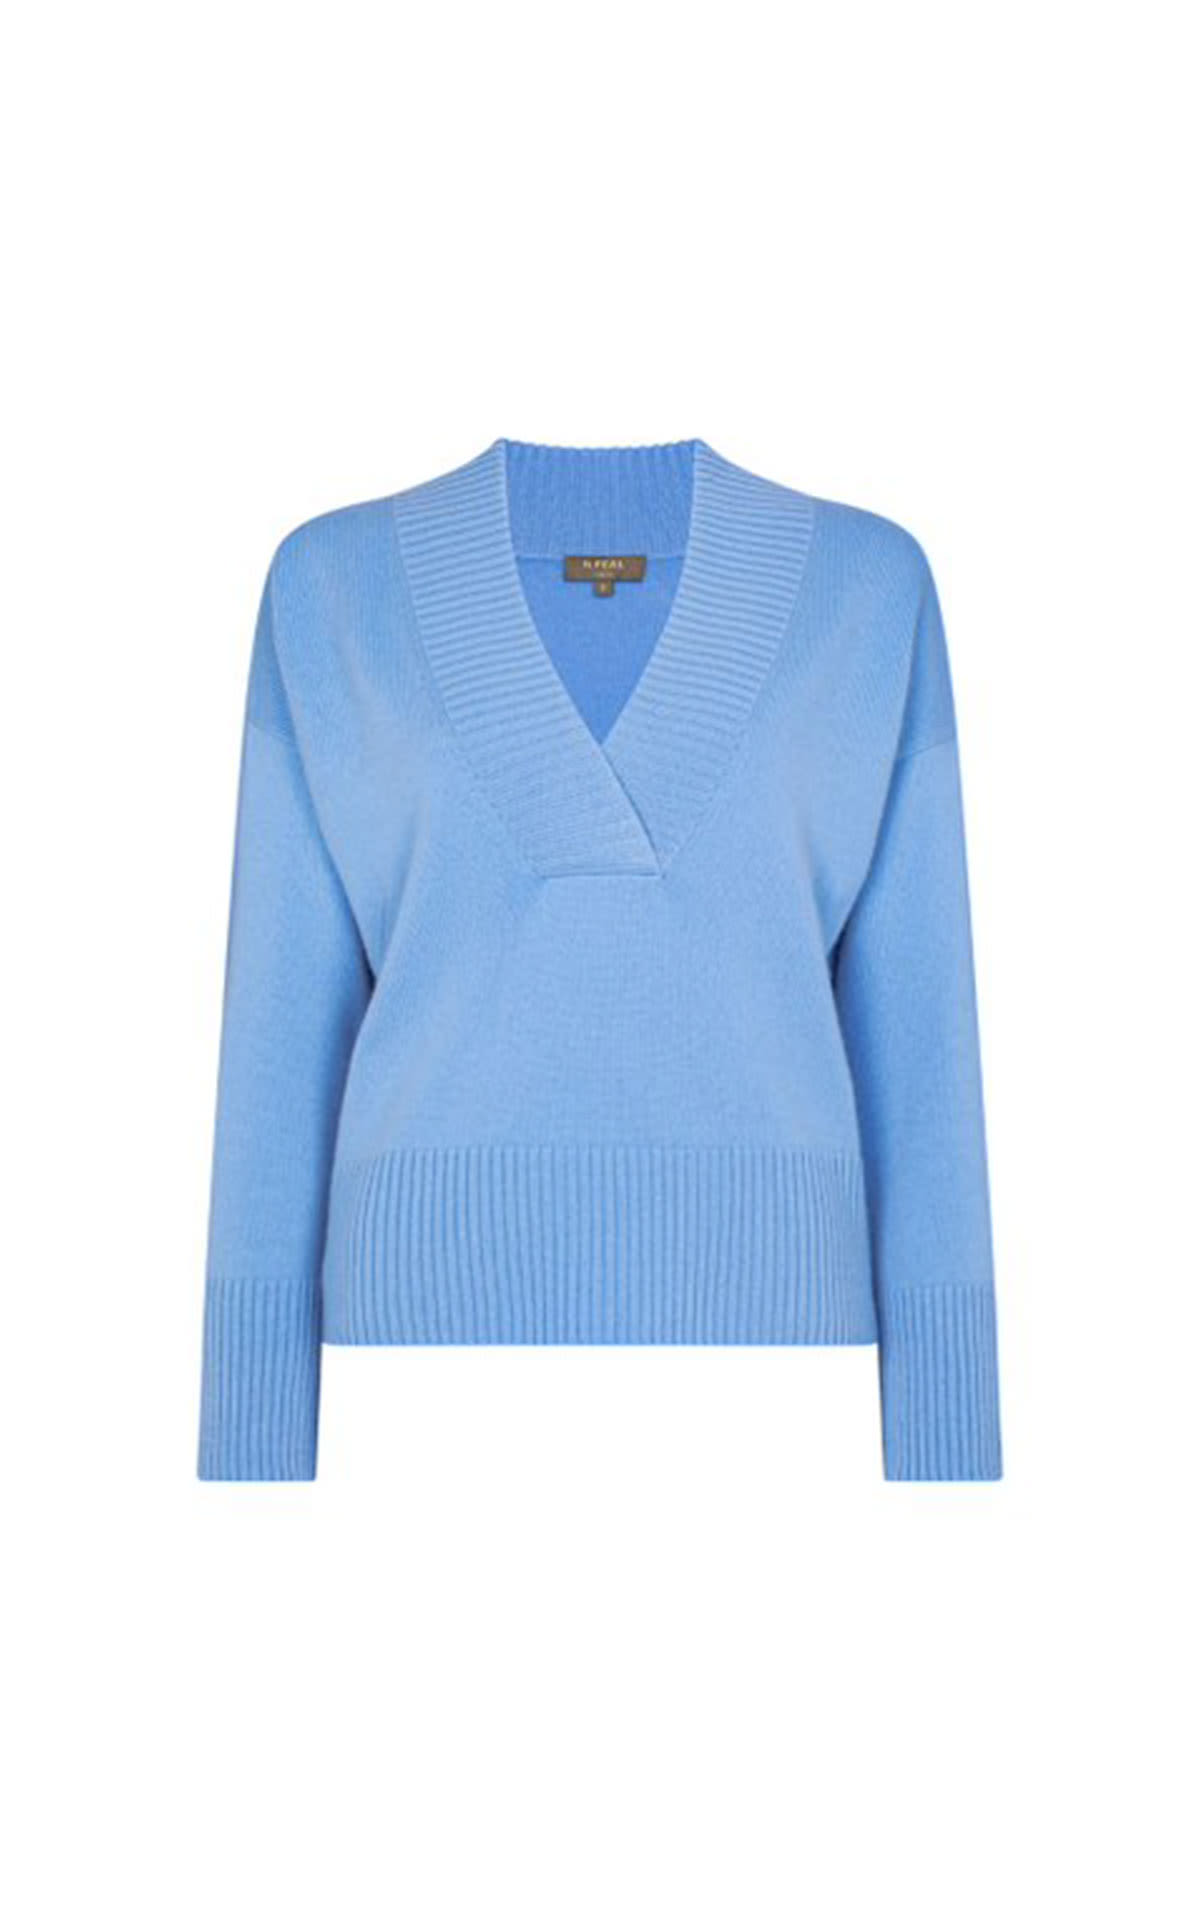 N.Peal Deep v neck sweater atlas blue from Bicester Village